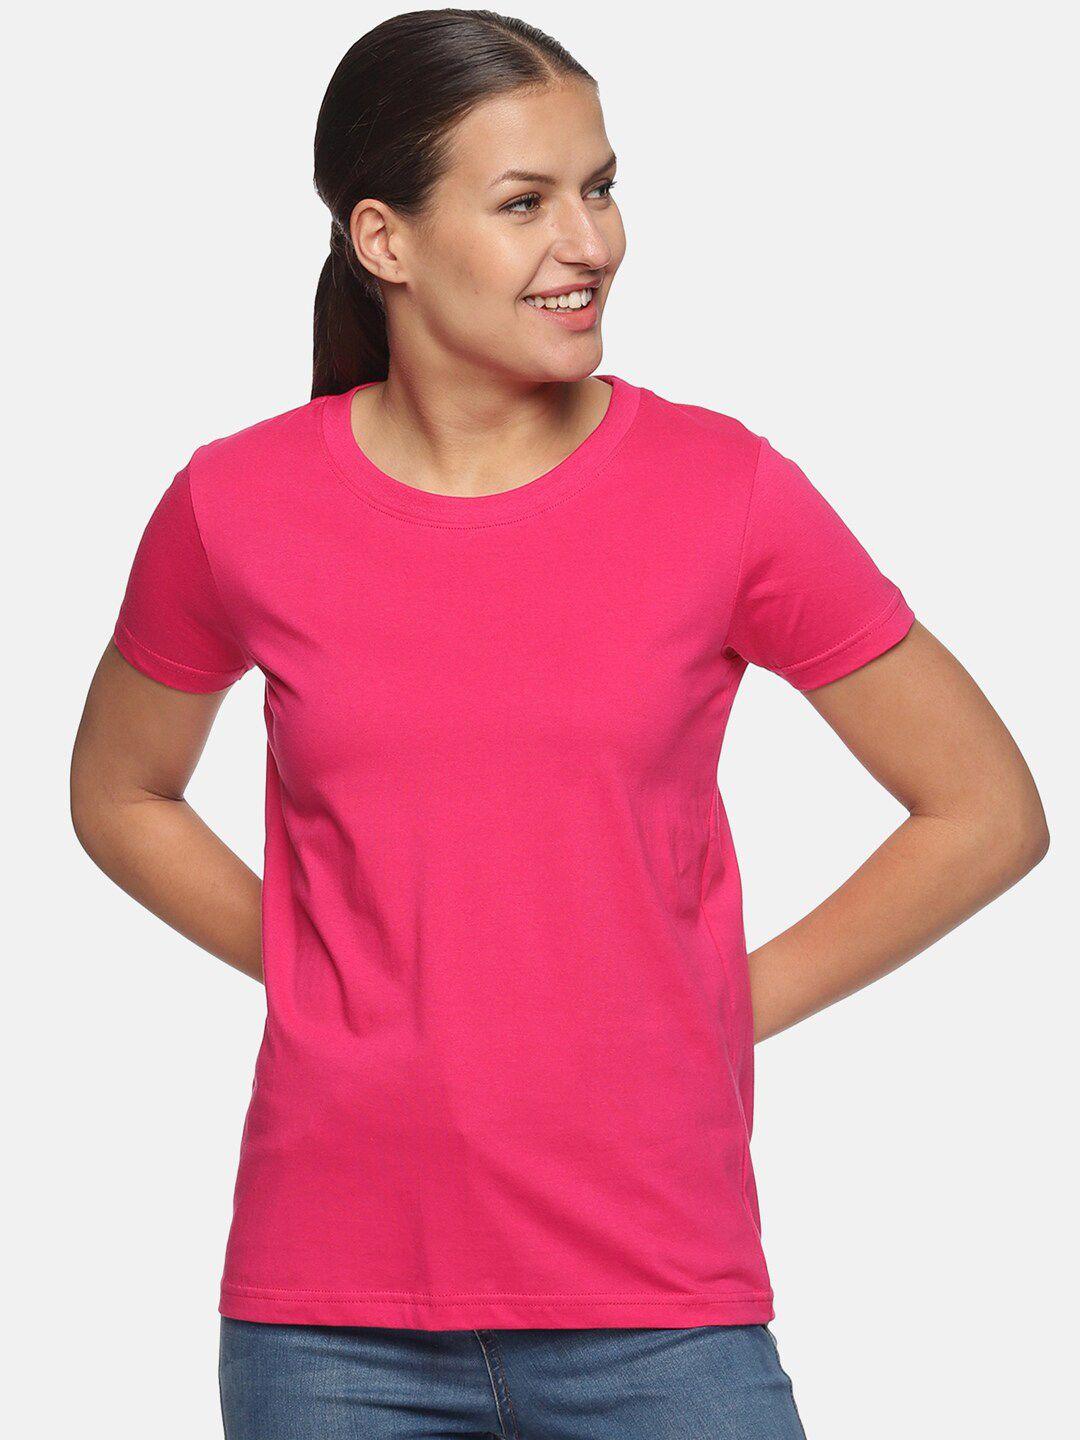 trends-tower-women-pink-pure-cotton-t-shirt